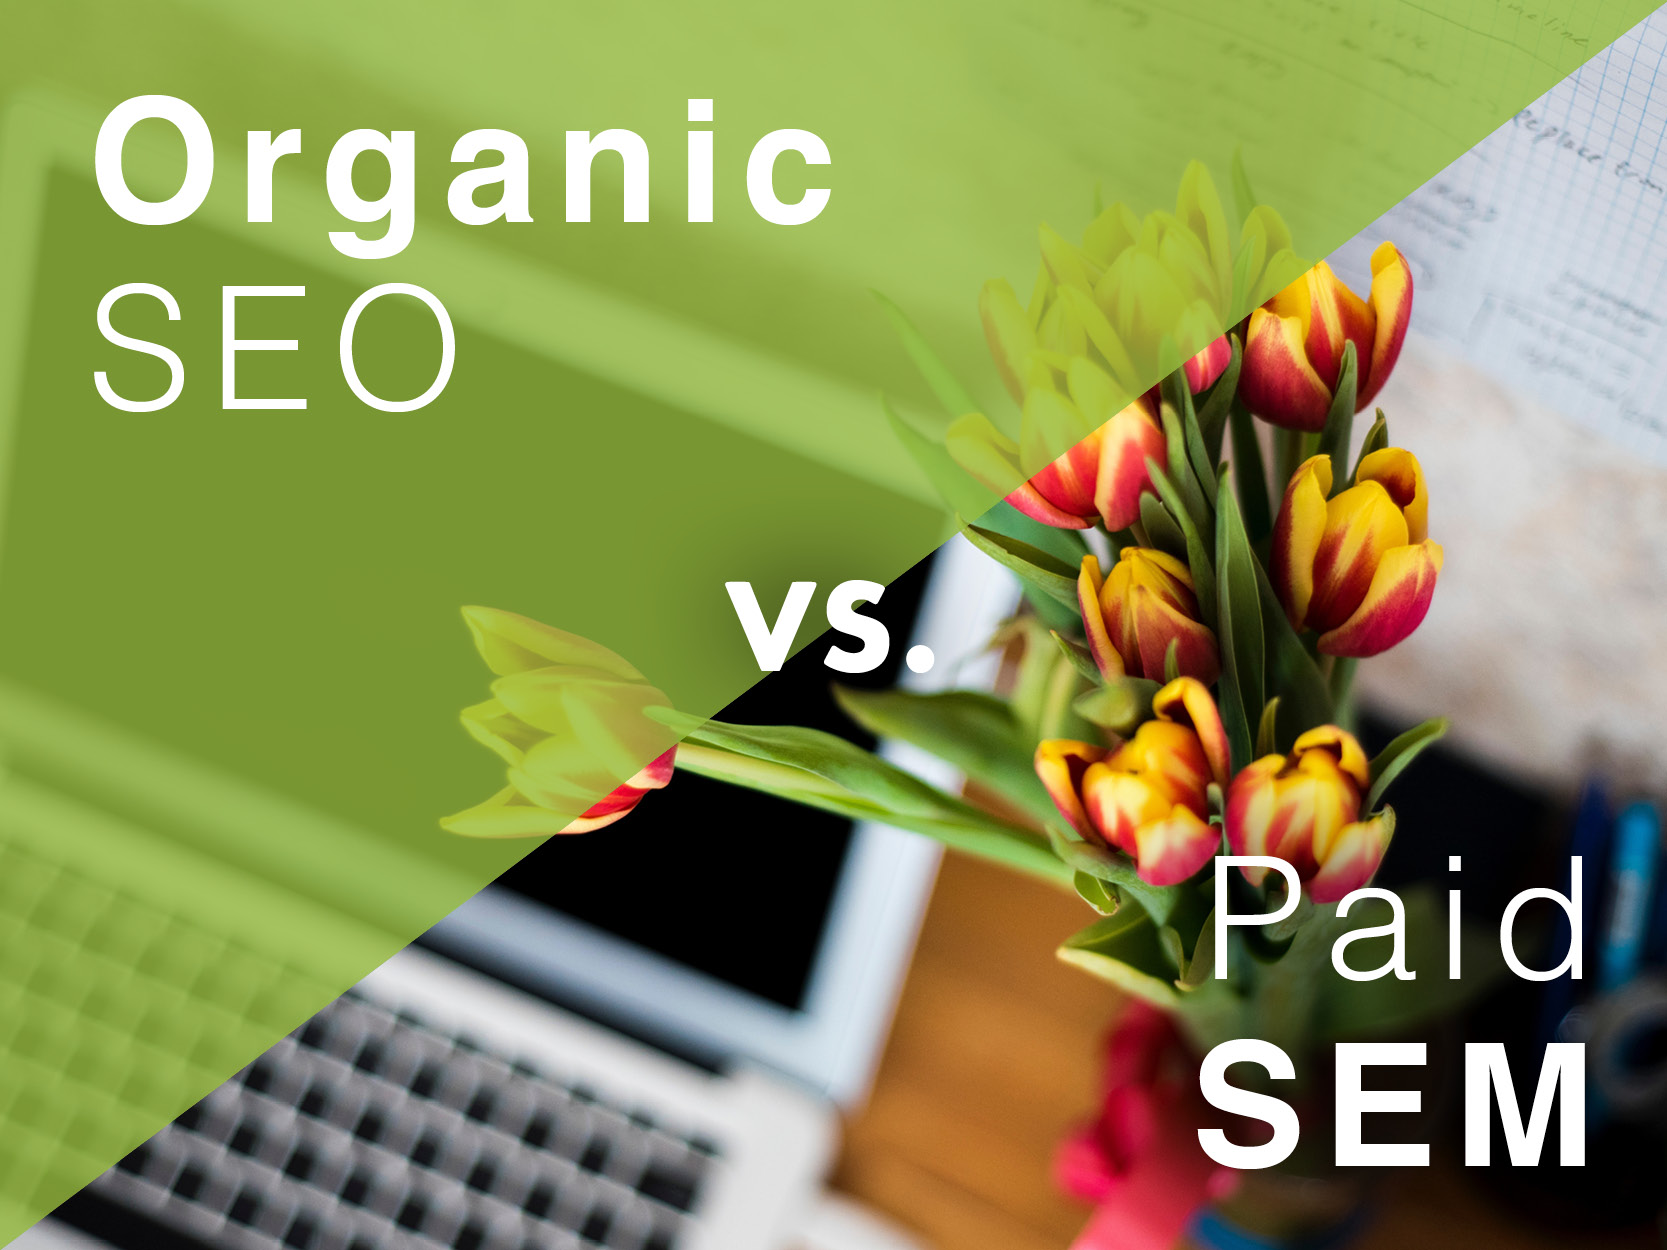 Organic SEO vs. Paid SEM